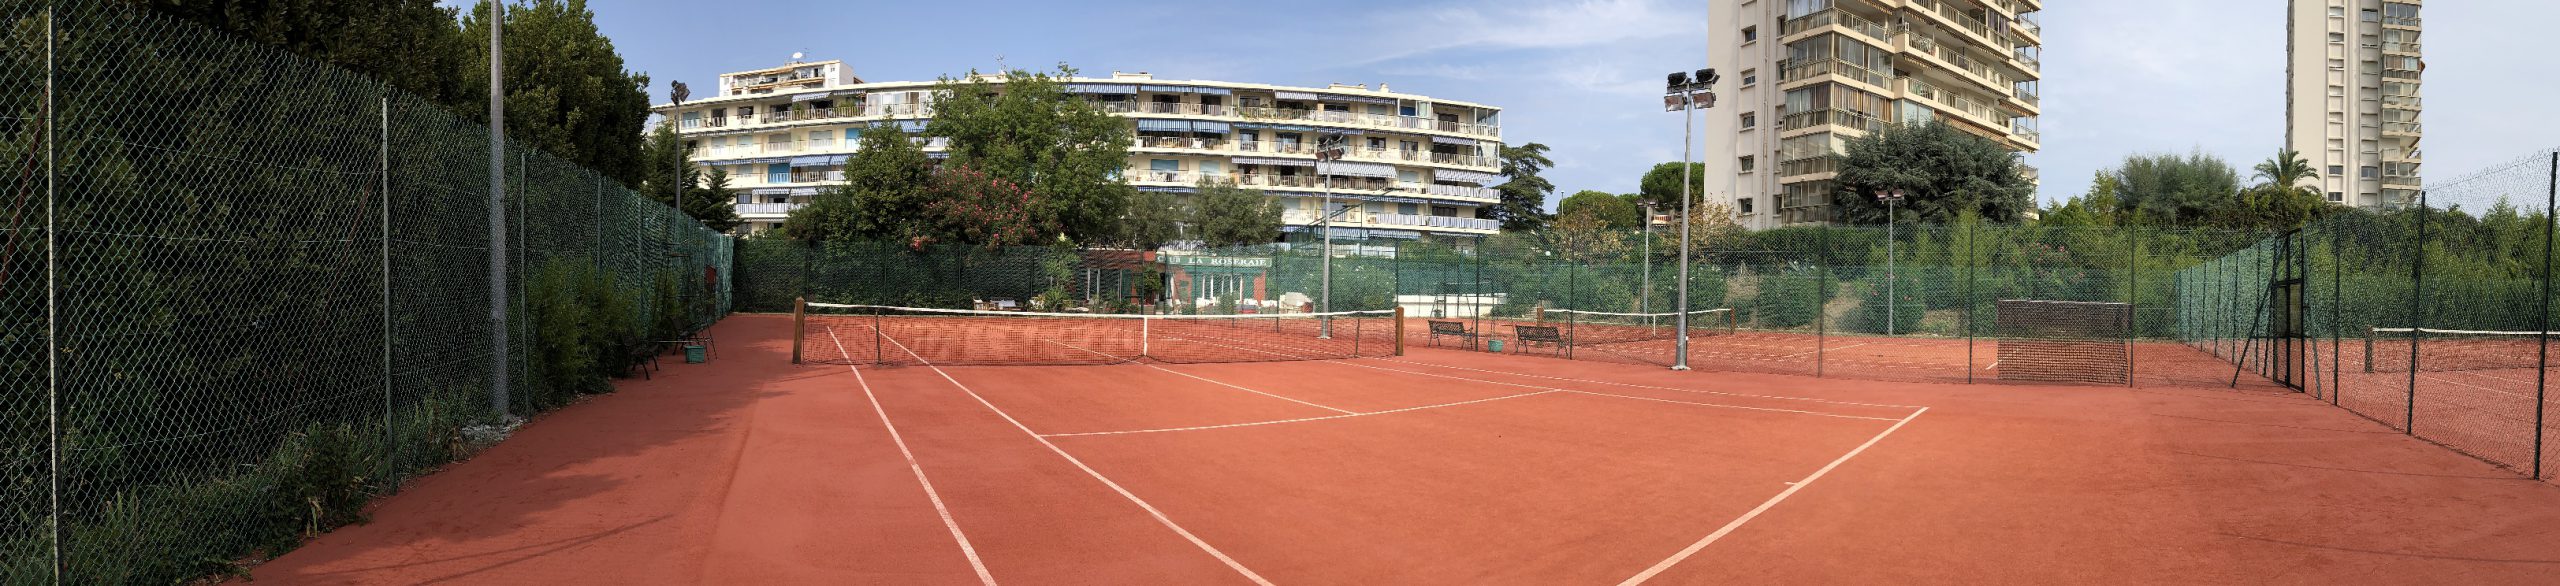 Court tennis club La Roseraie